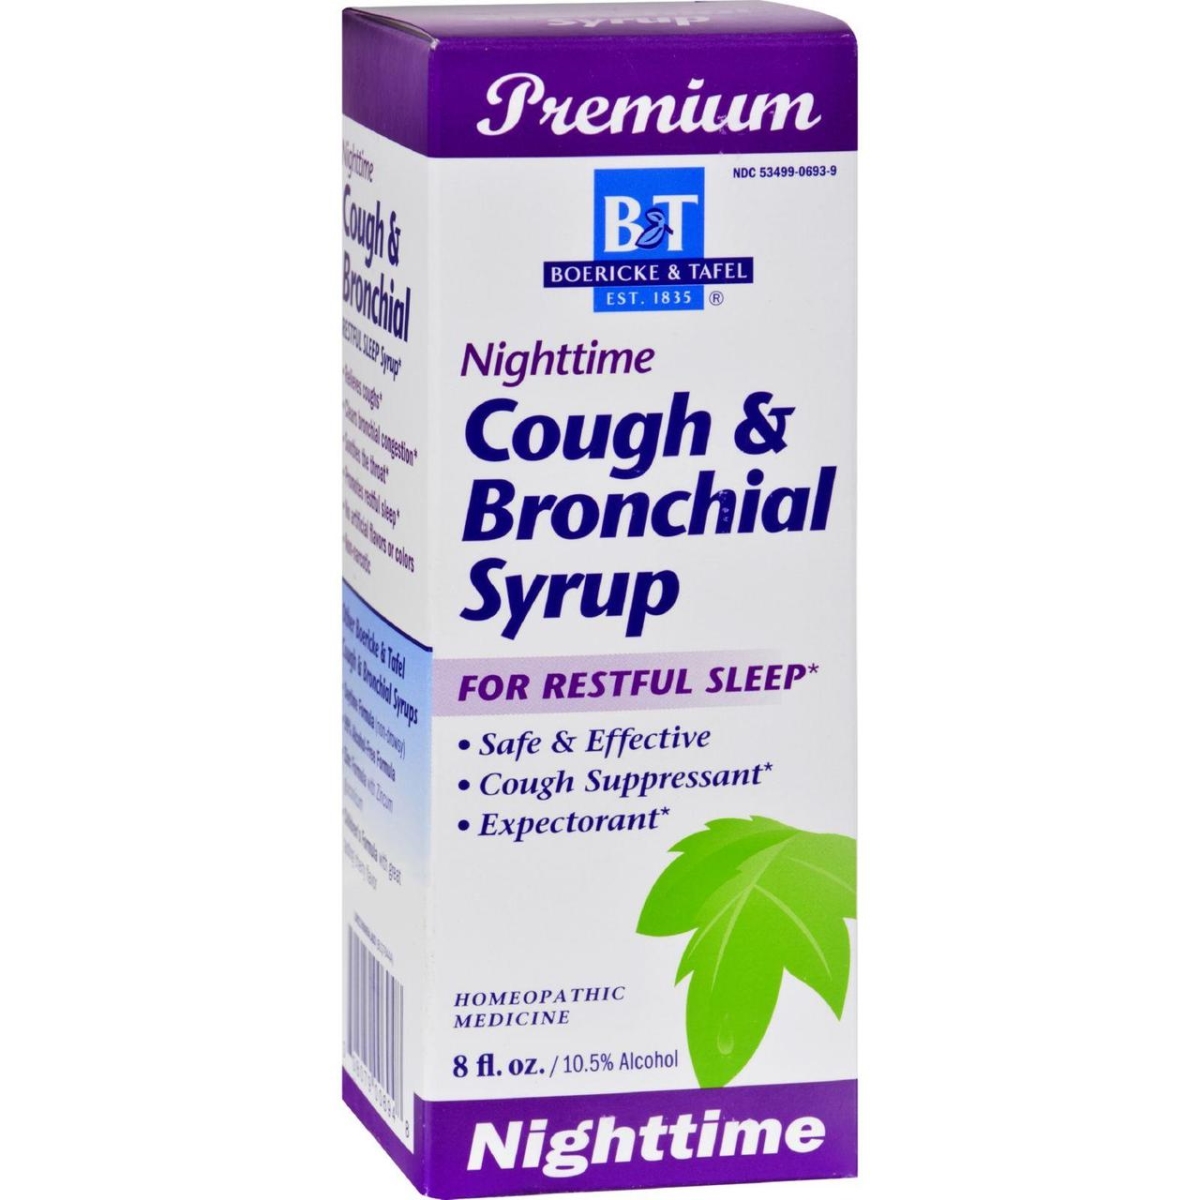 Boericke And Tafel Hg0411645 8 Fl Oz Cough & Bronchial Syrup Nighttime